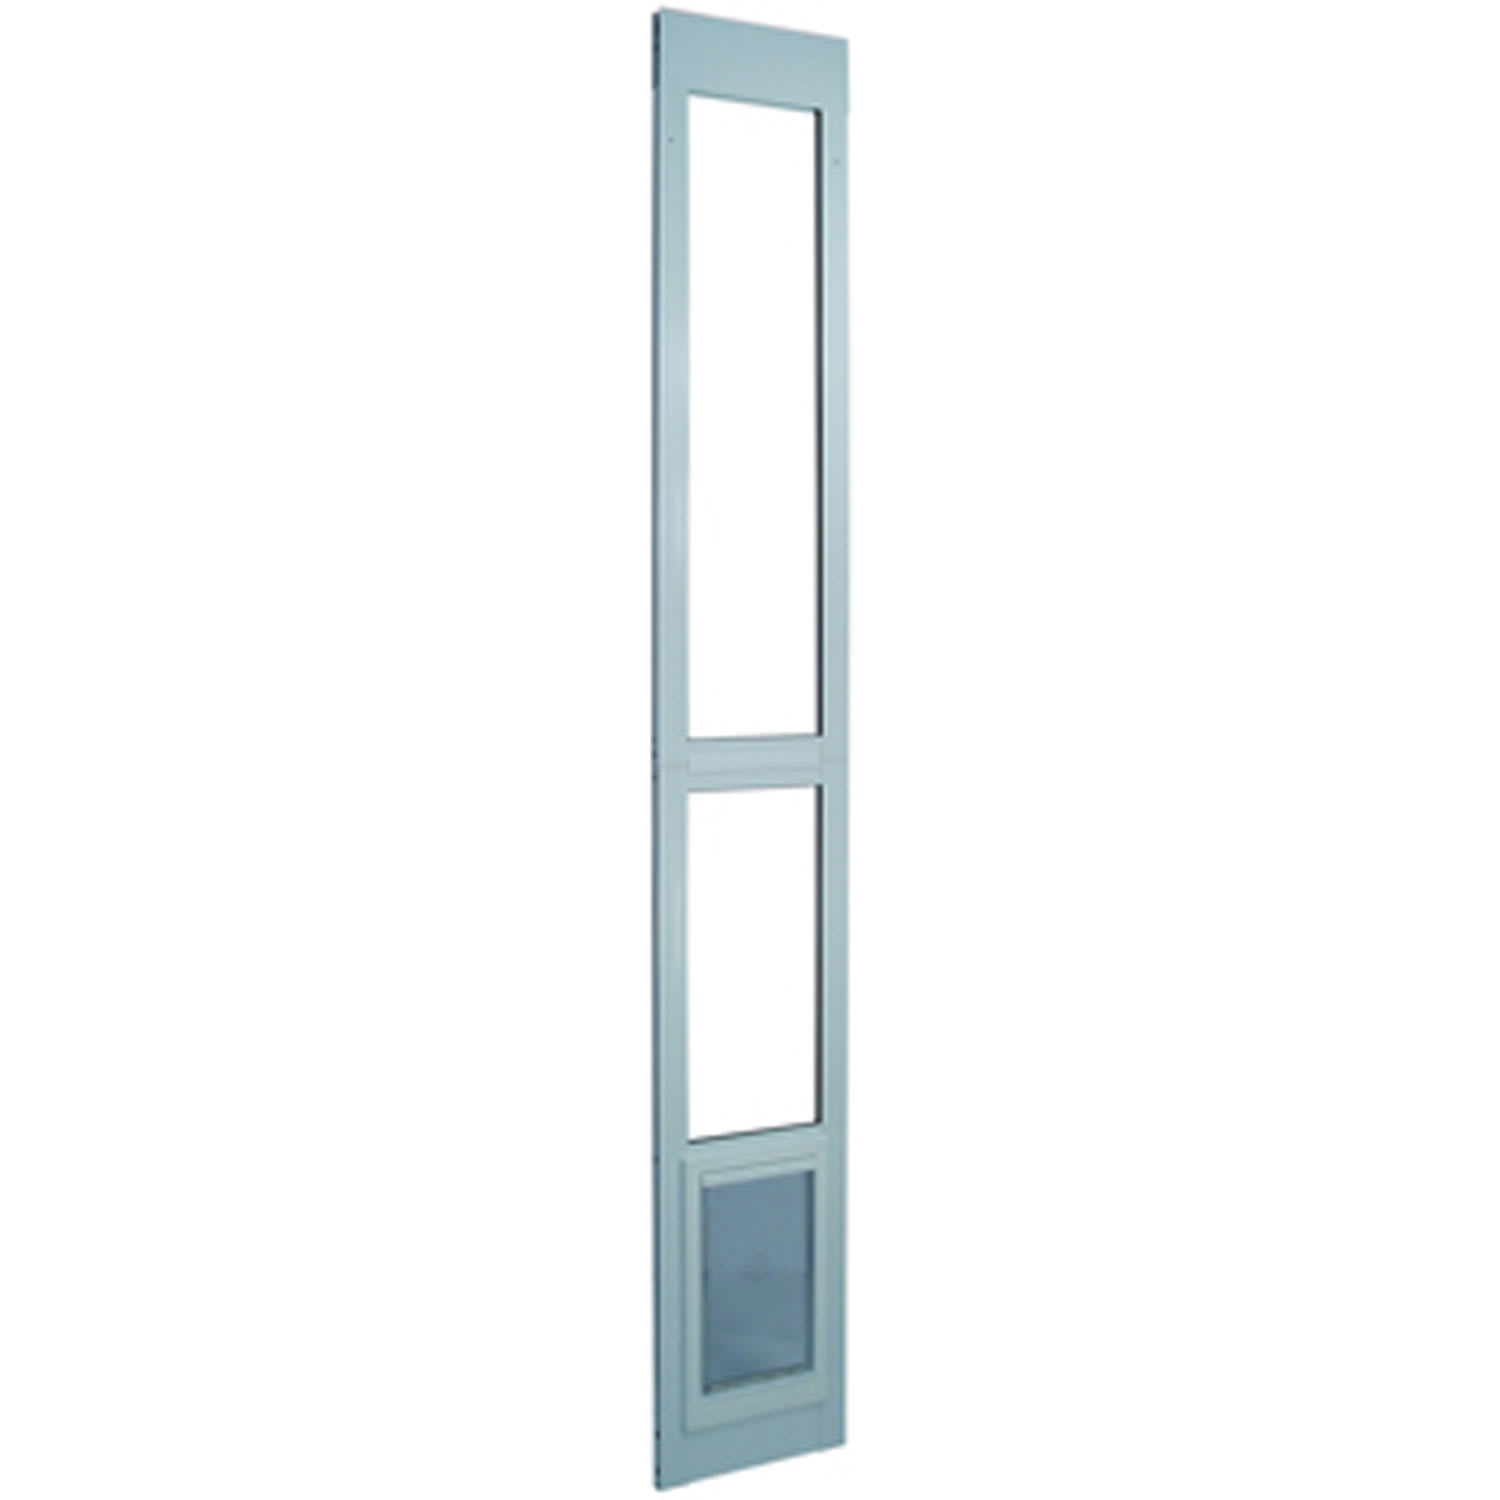 Perfect Pet Modular Patio Panel Pet Door in White, 9.75IN x 1.625IN x 40.75IN, Small